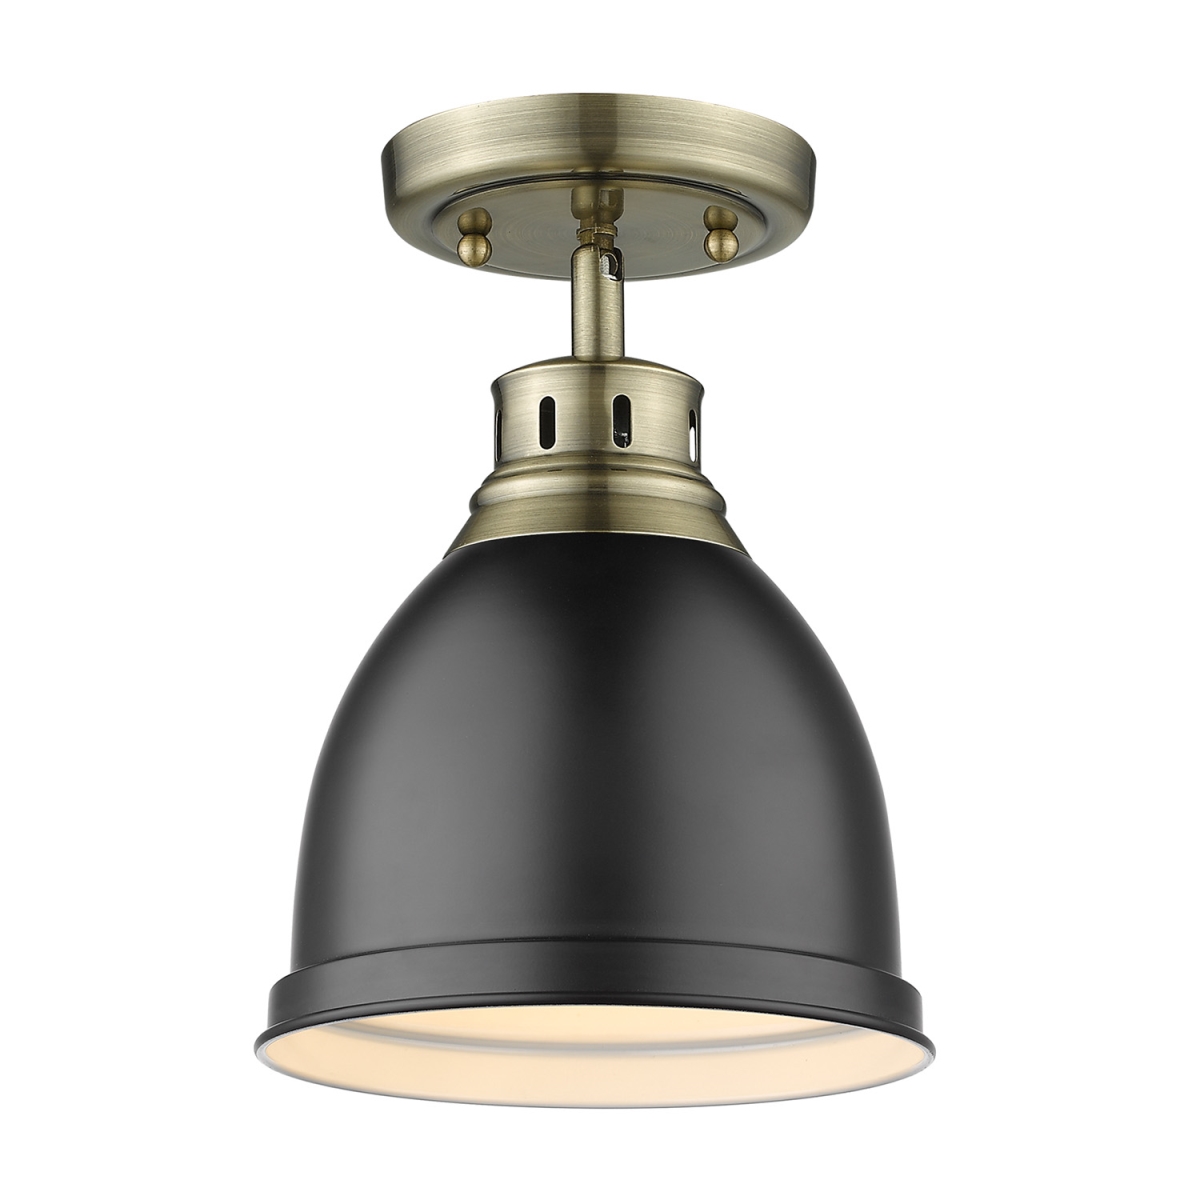 3602-fm Ab-blk Duncan Flush Mount Light With Matte Black Shade, Aged Brass